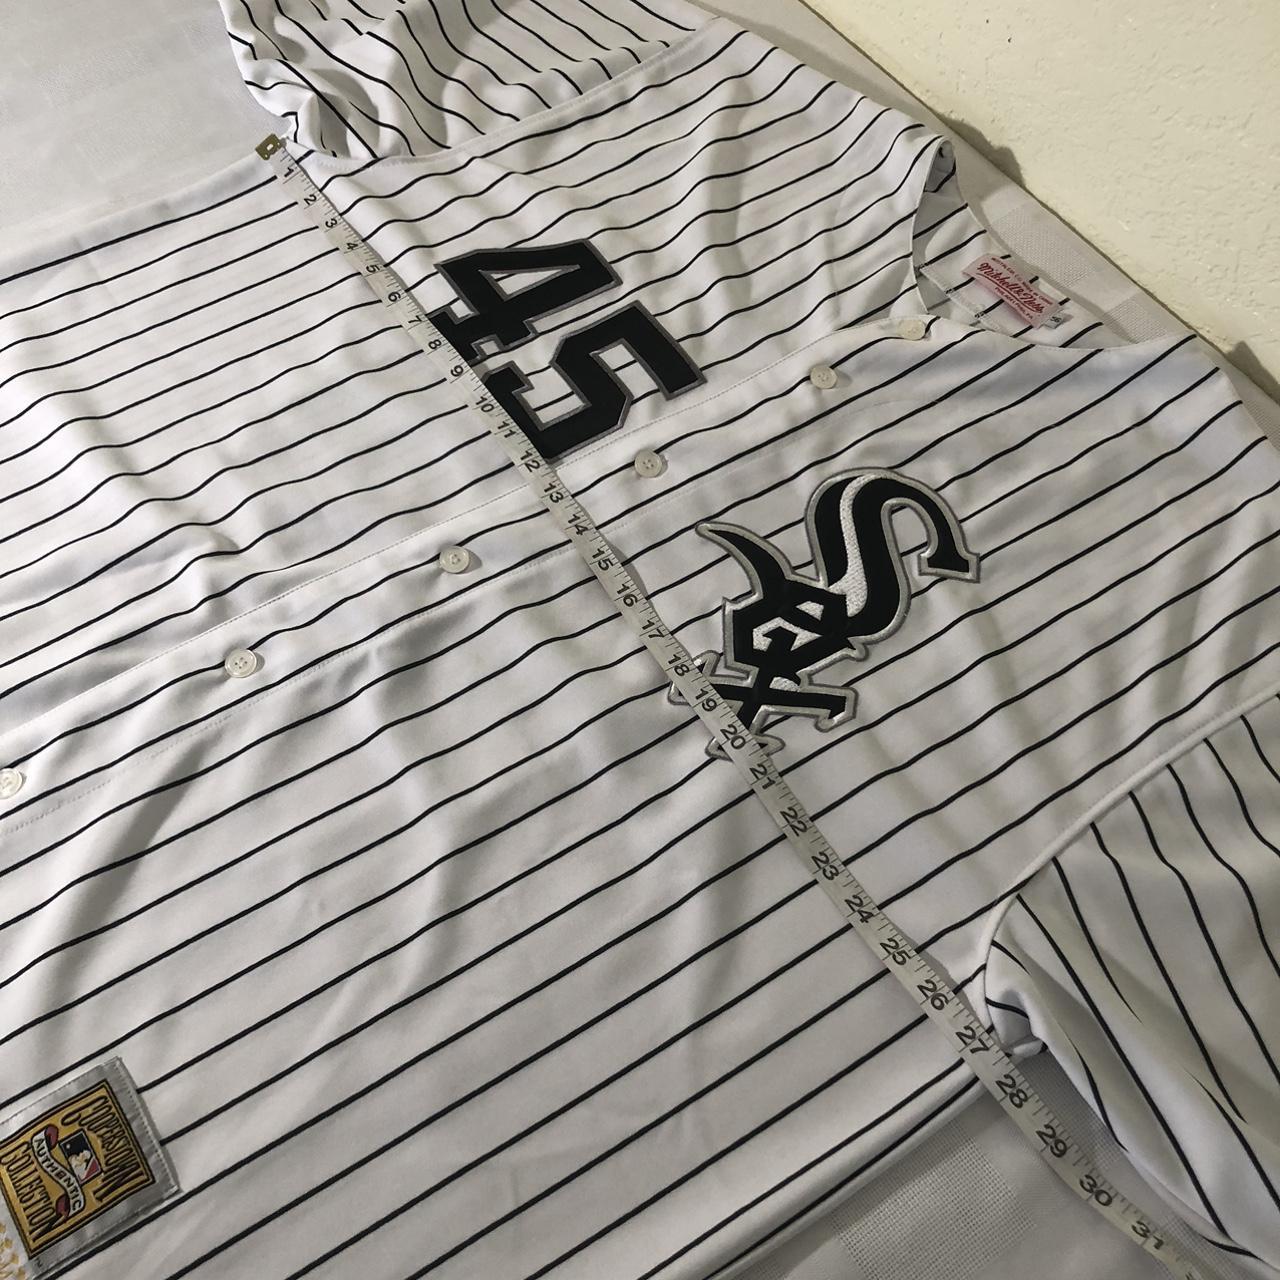 Majestic, Shirts, Jordan White Sox Jersey